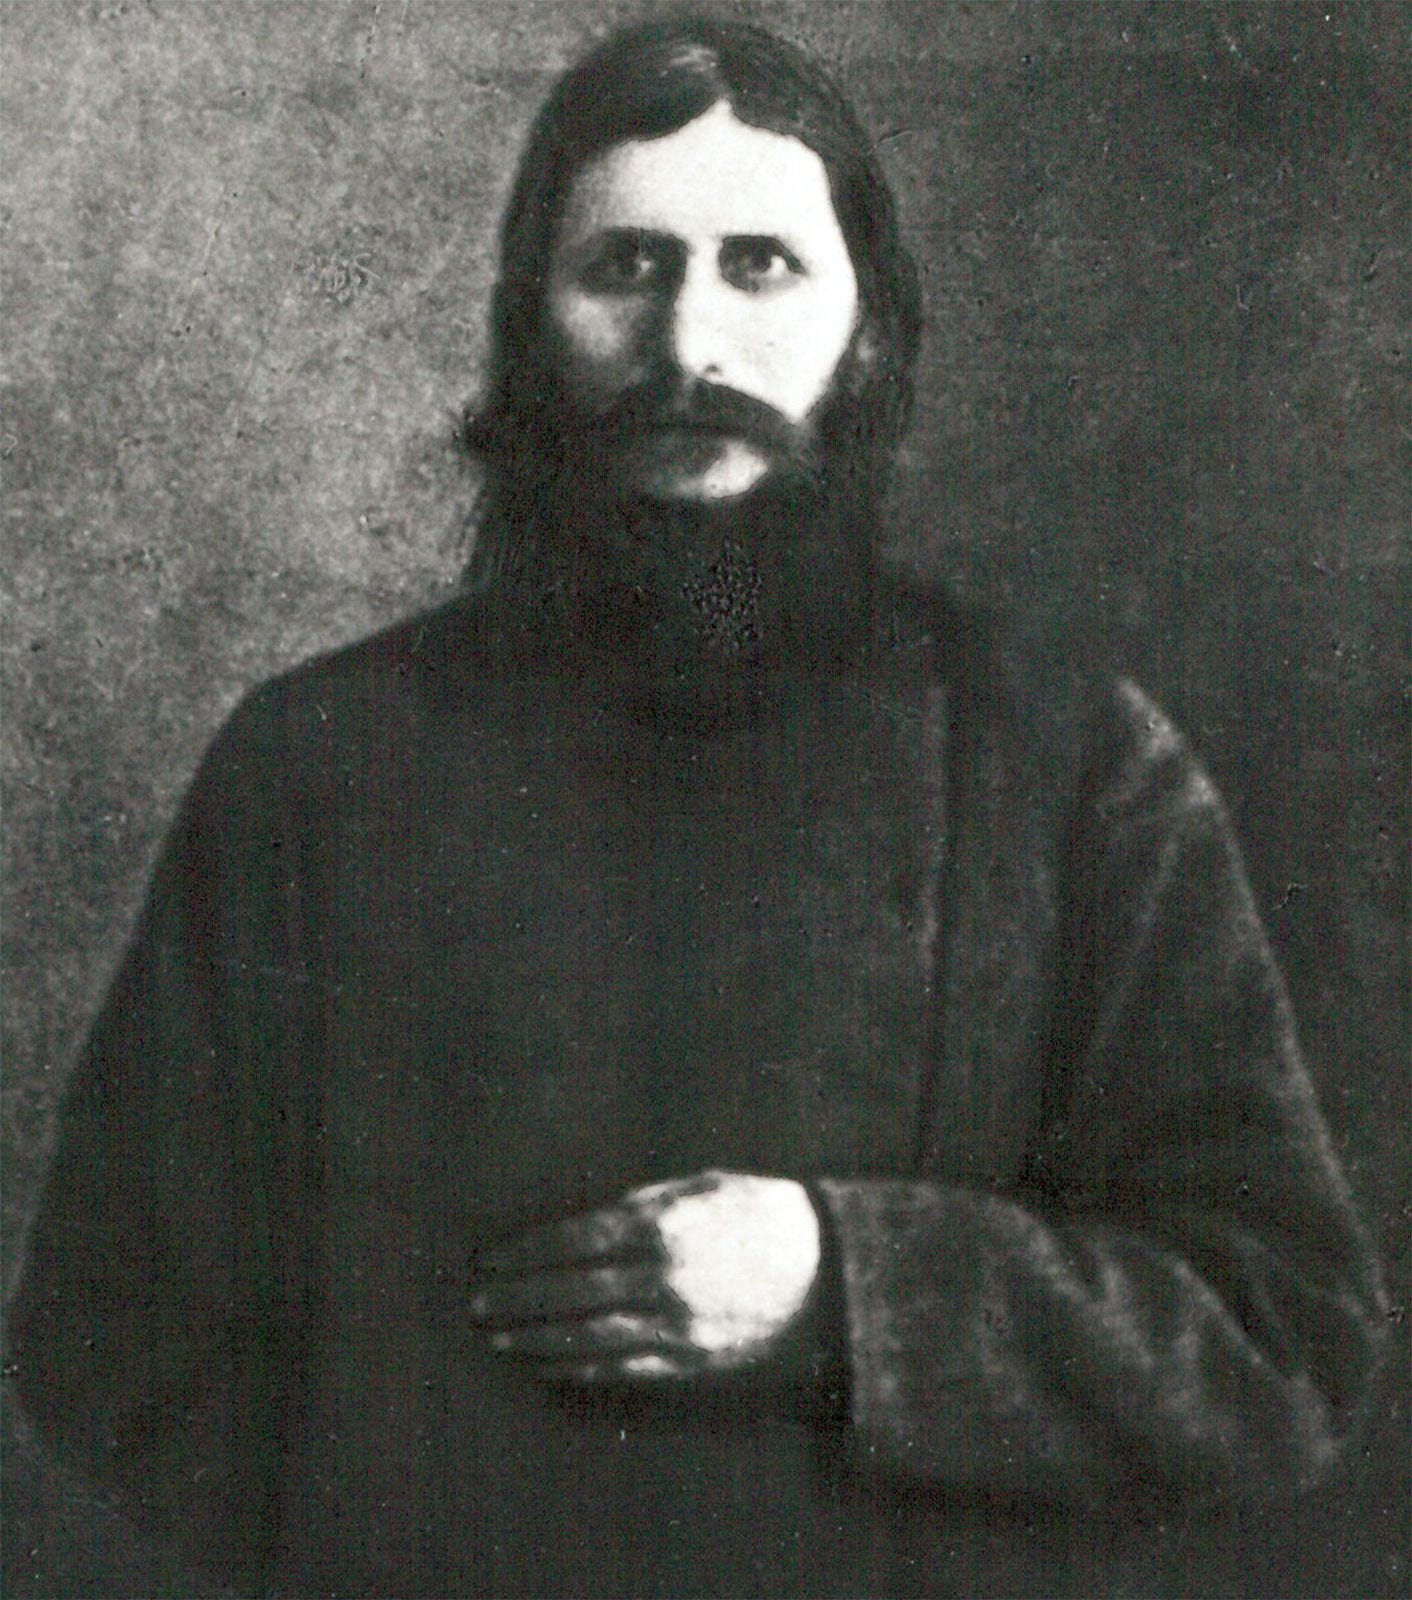 Grigori Rasputin | Biography, Facts, & Death | Britannica